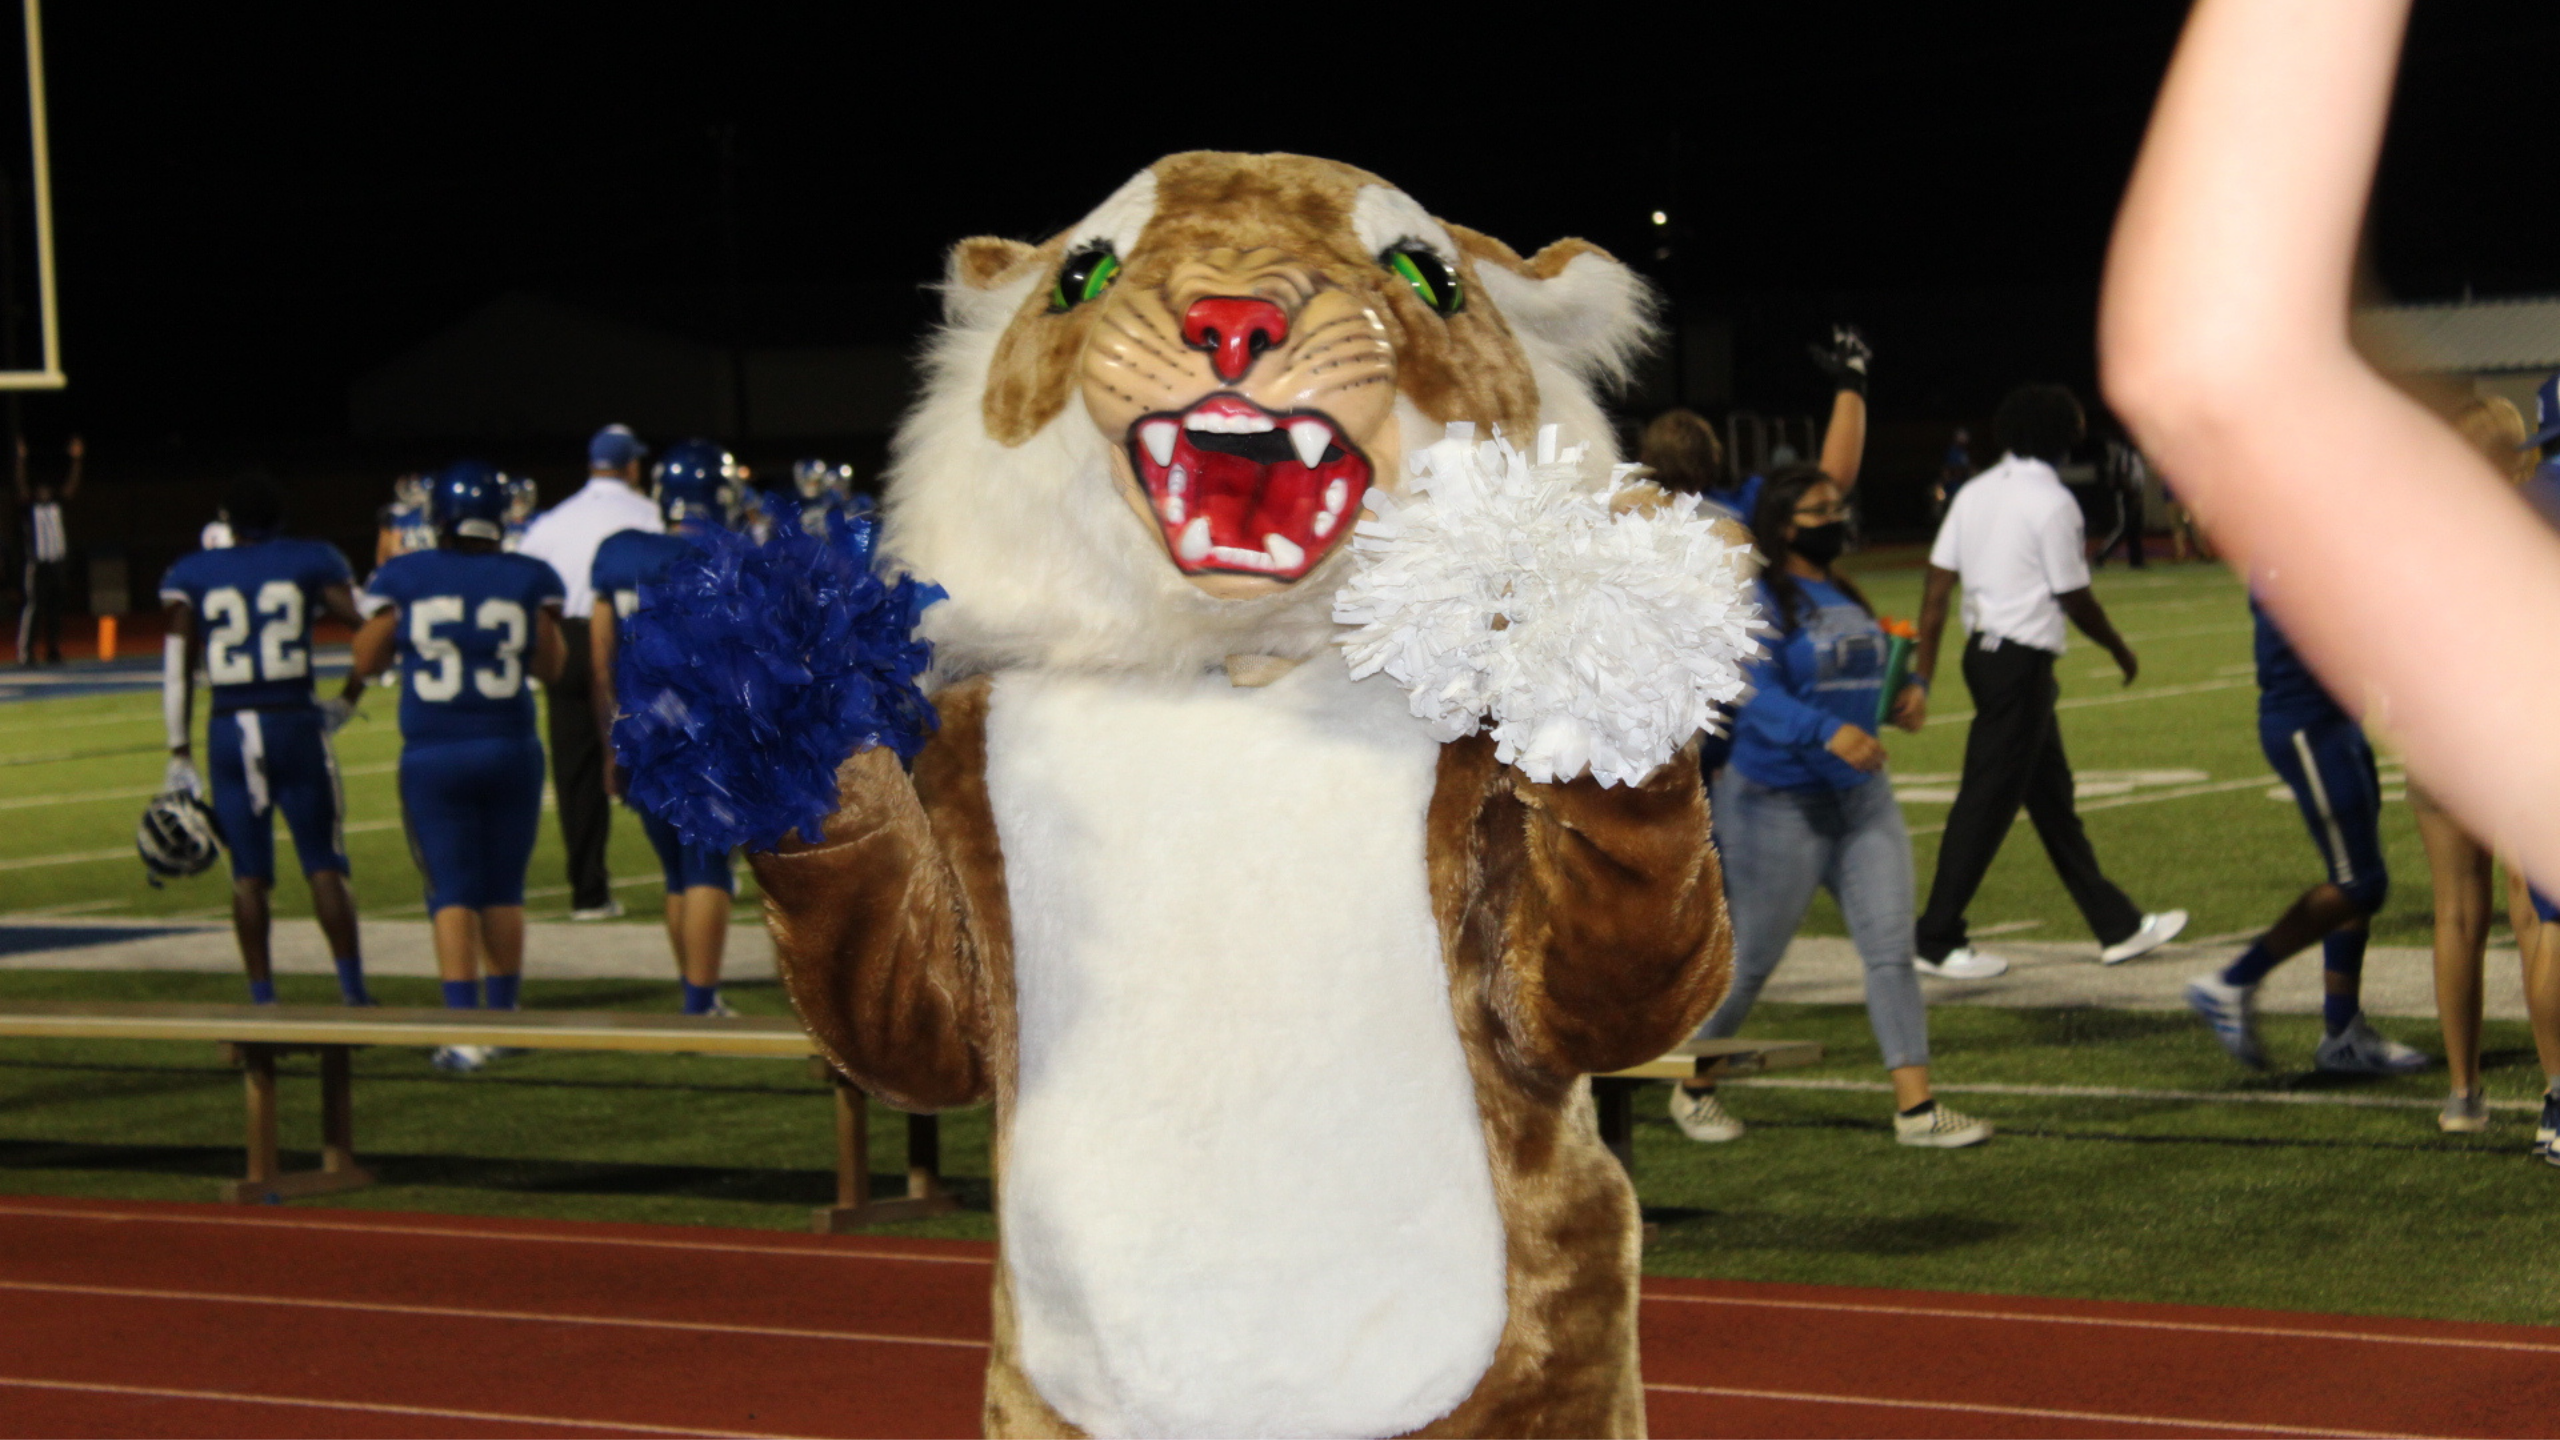 wildcat mascot cheering on the sidelines